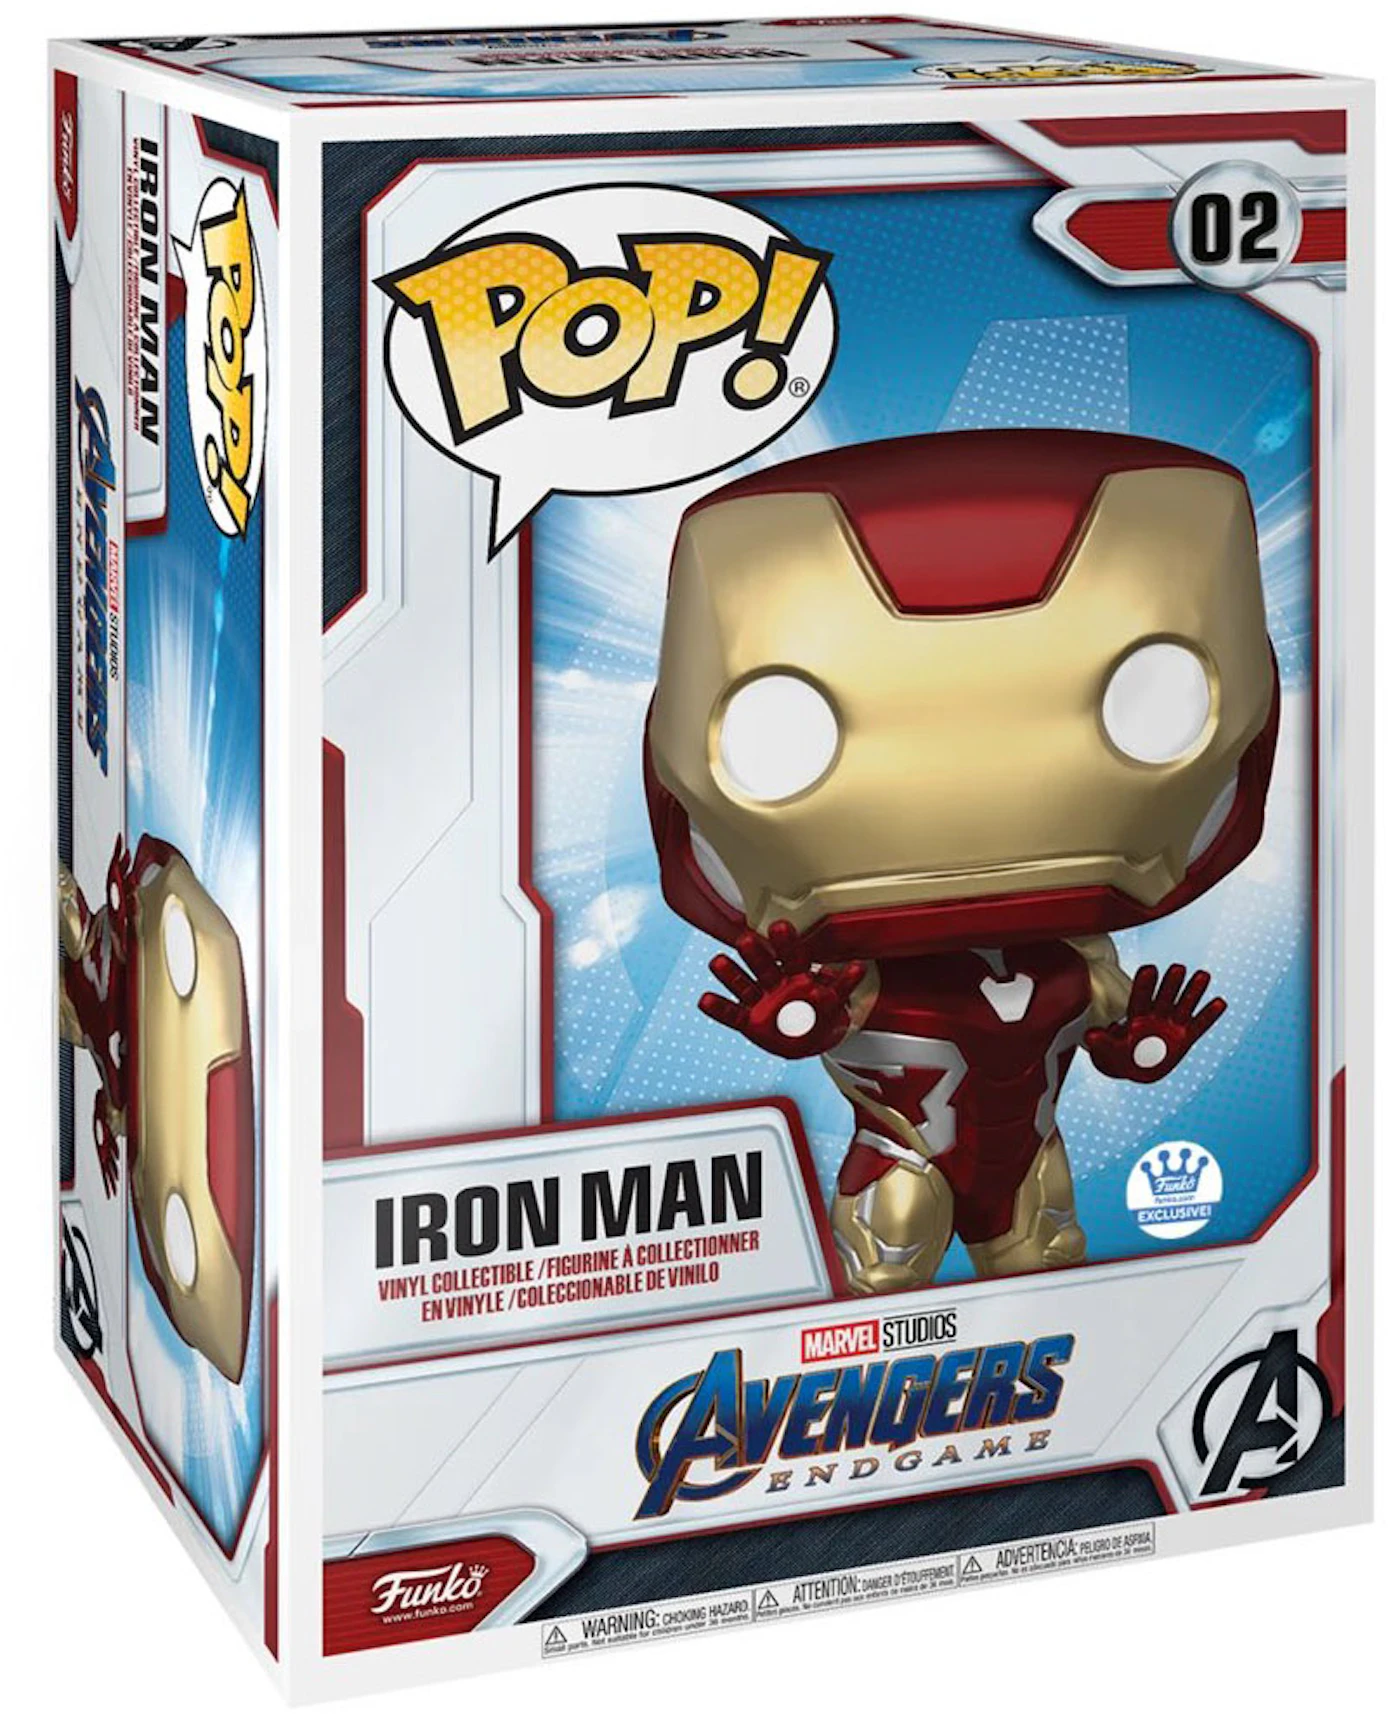 Funko Pop! Marvel Avengers End Game Iron Man 18 Inch Funko Shop Exclusive  Figure #02 - FW21 - US